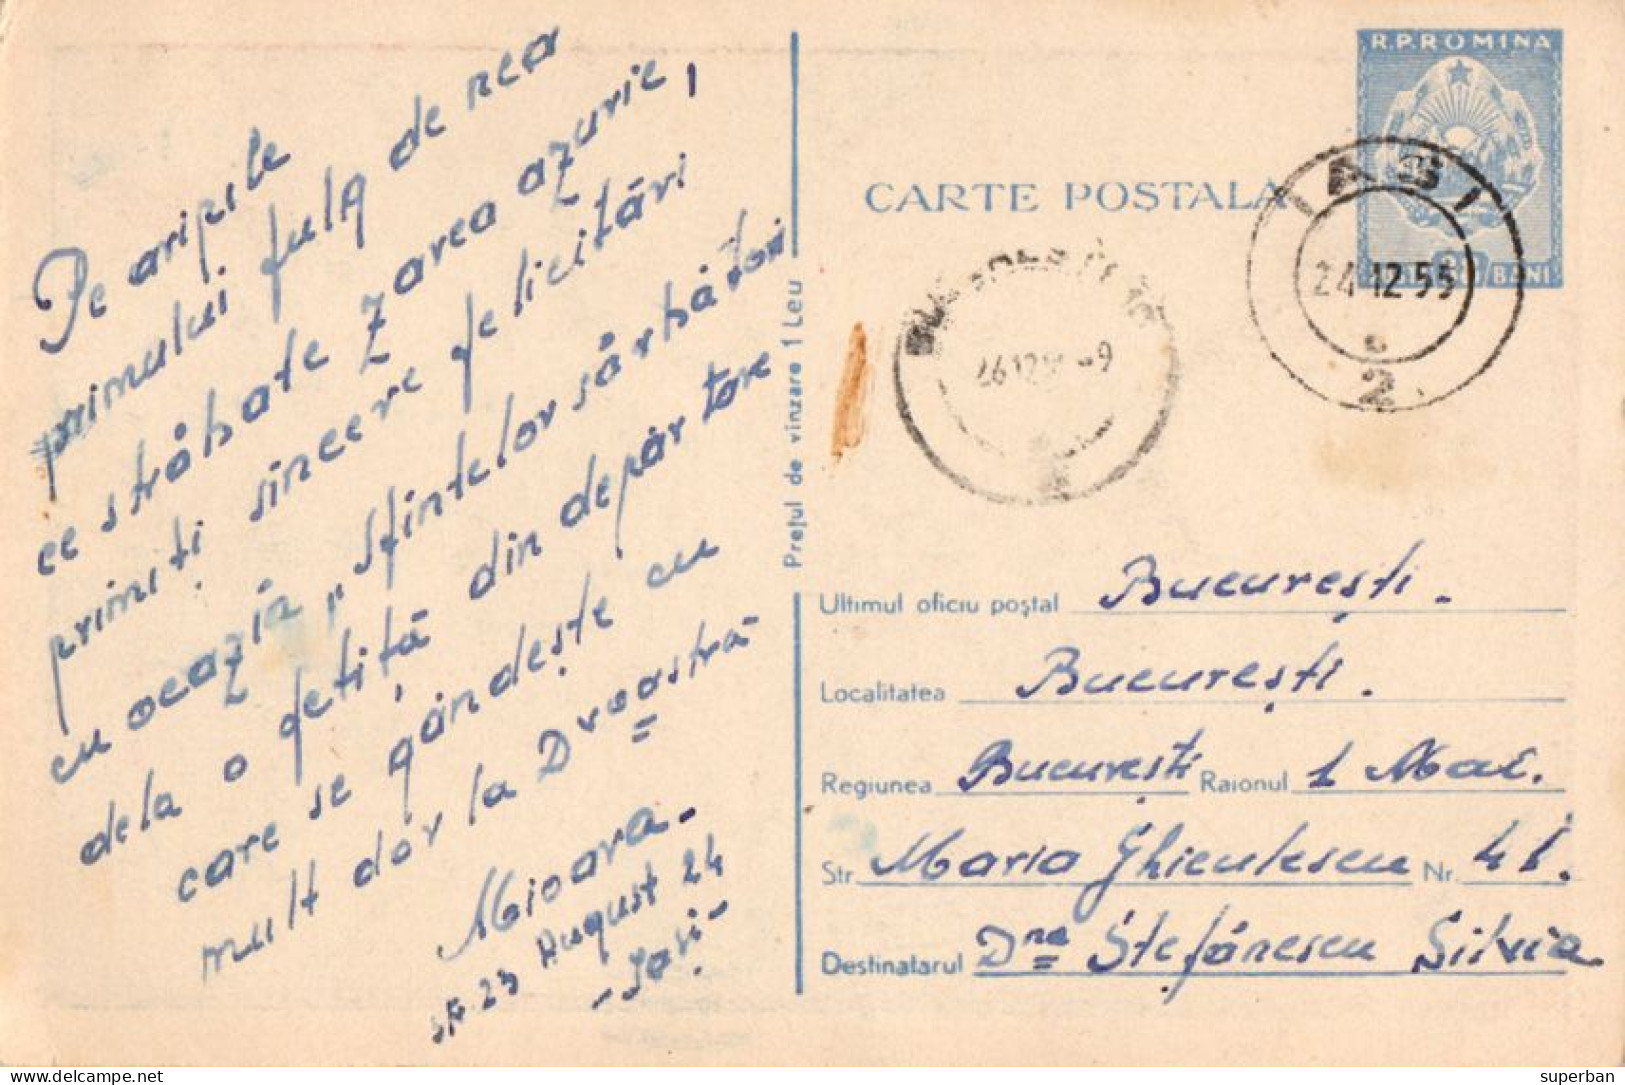 ROMANIA ~ 1955 ? - CARTE POSTALA / ENTIER POSTAL ILLUSTRÉ / STATIONERY PICTURE POSTCARD : 38 BANI - RRR ! (an663) - Enteros Postales